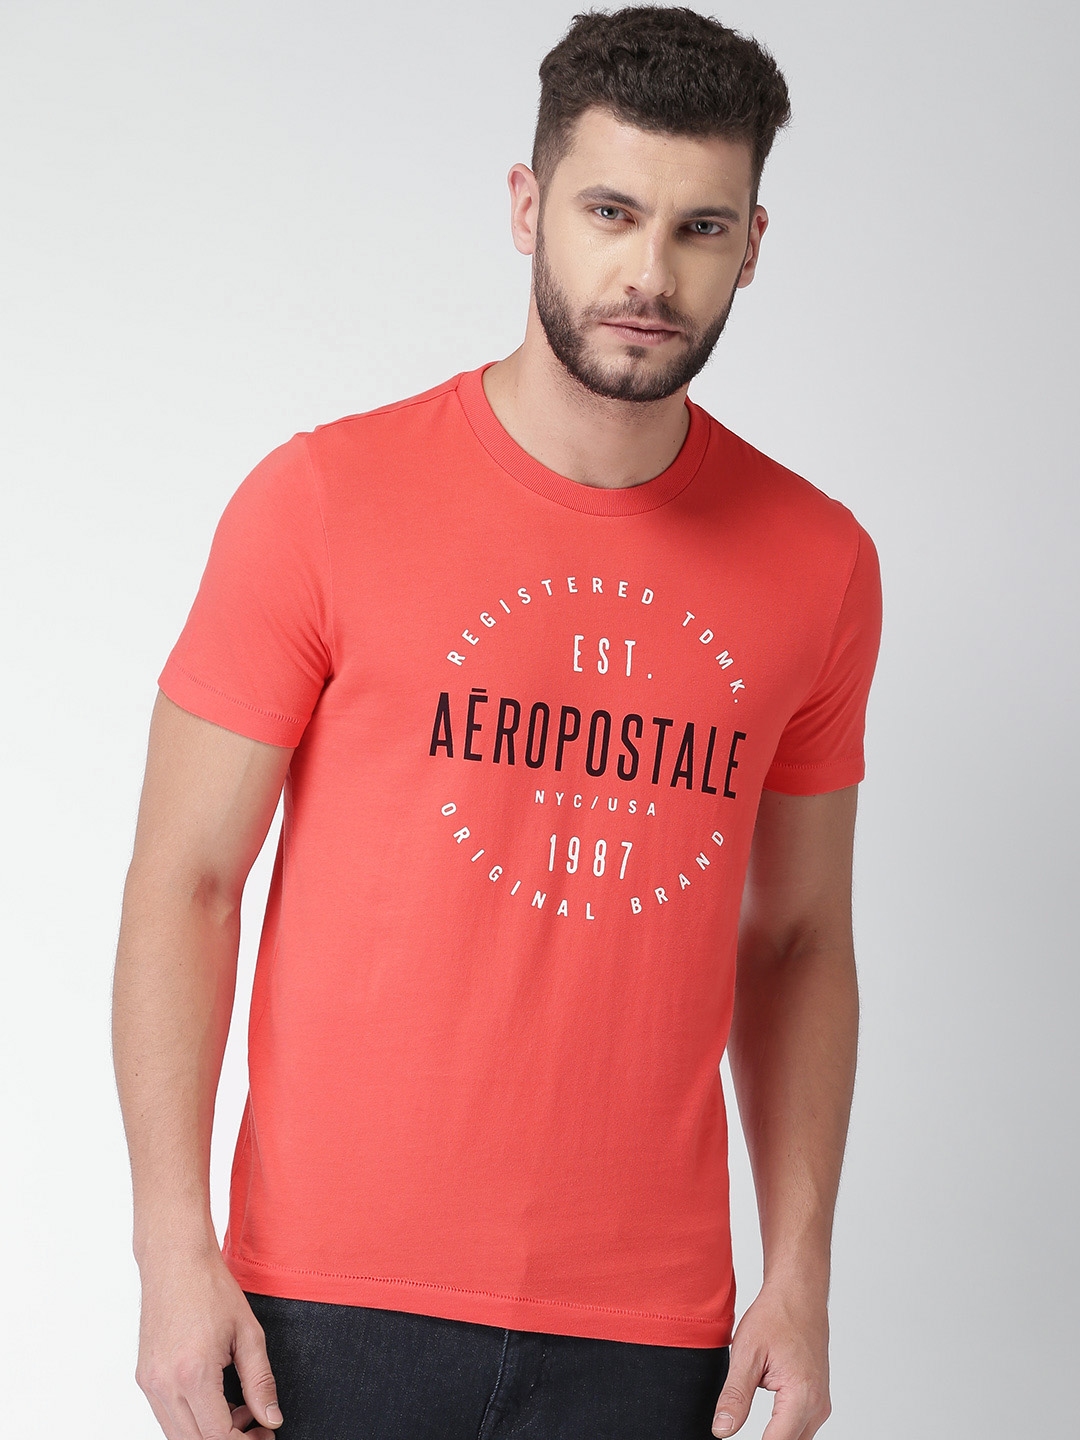 Buy Aeropostale Men Coral Red Crew Neck Brand Print T-Shirt